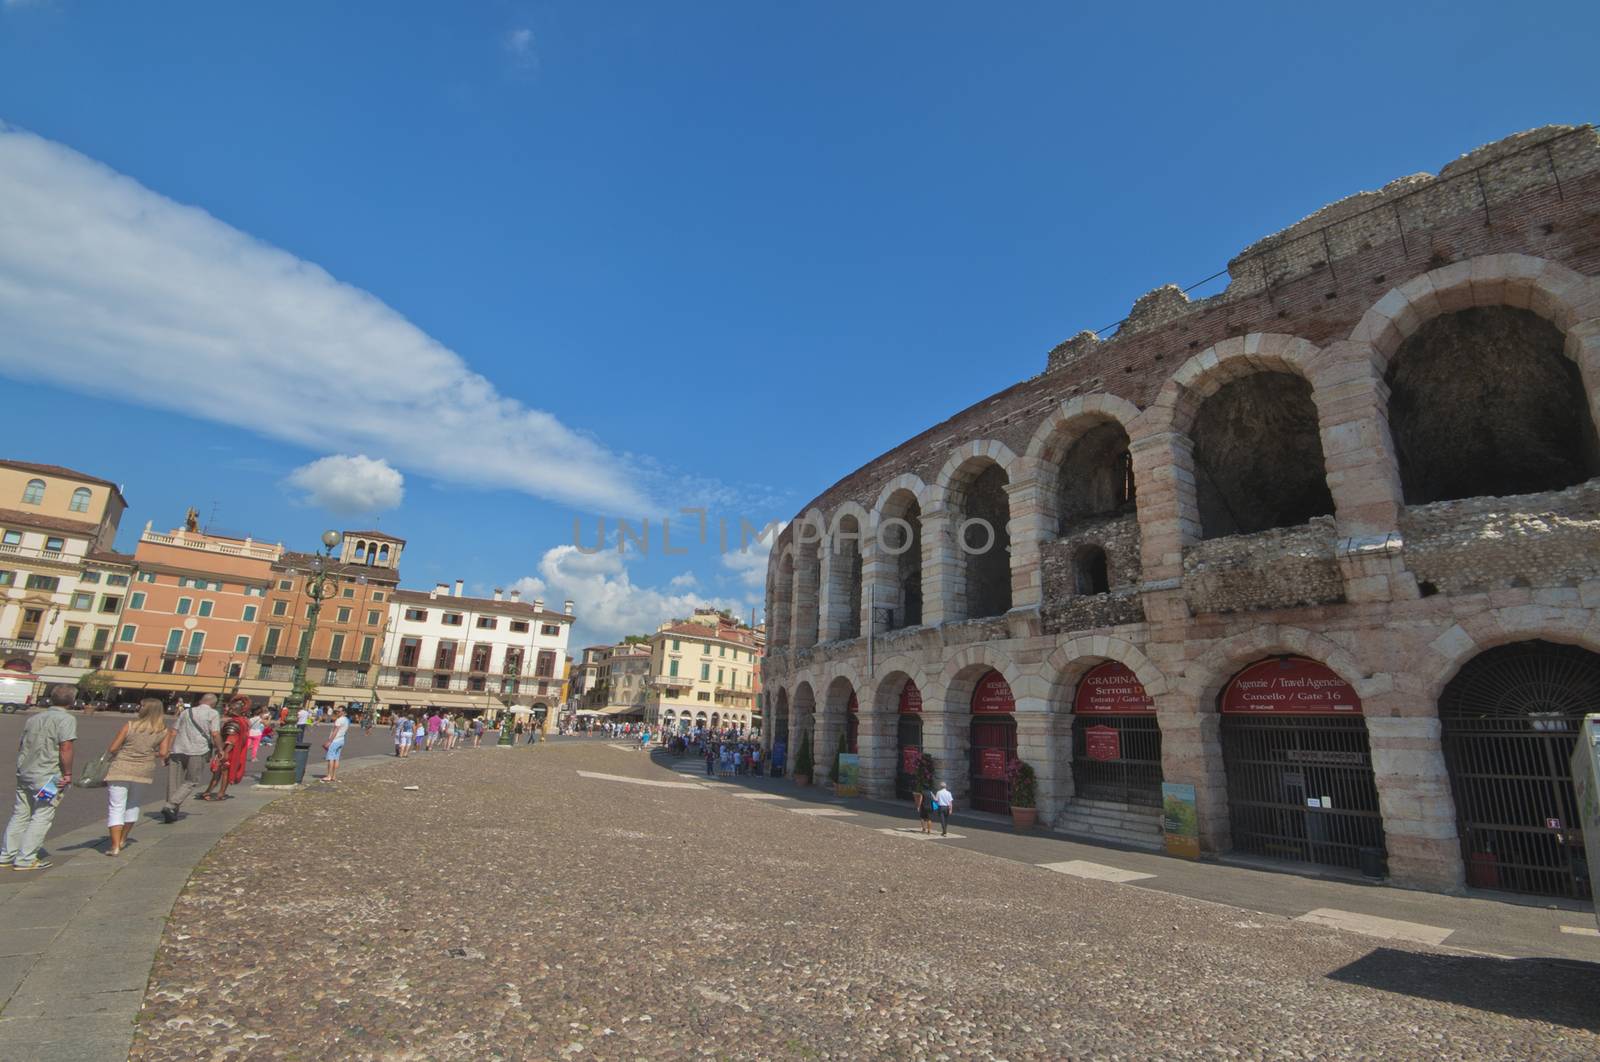 Arena di Verona on a sunny day. Italy